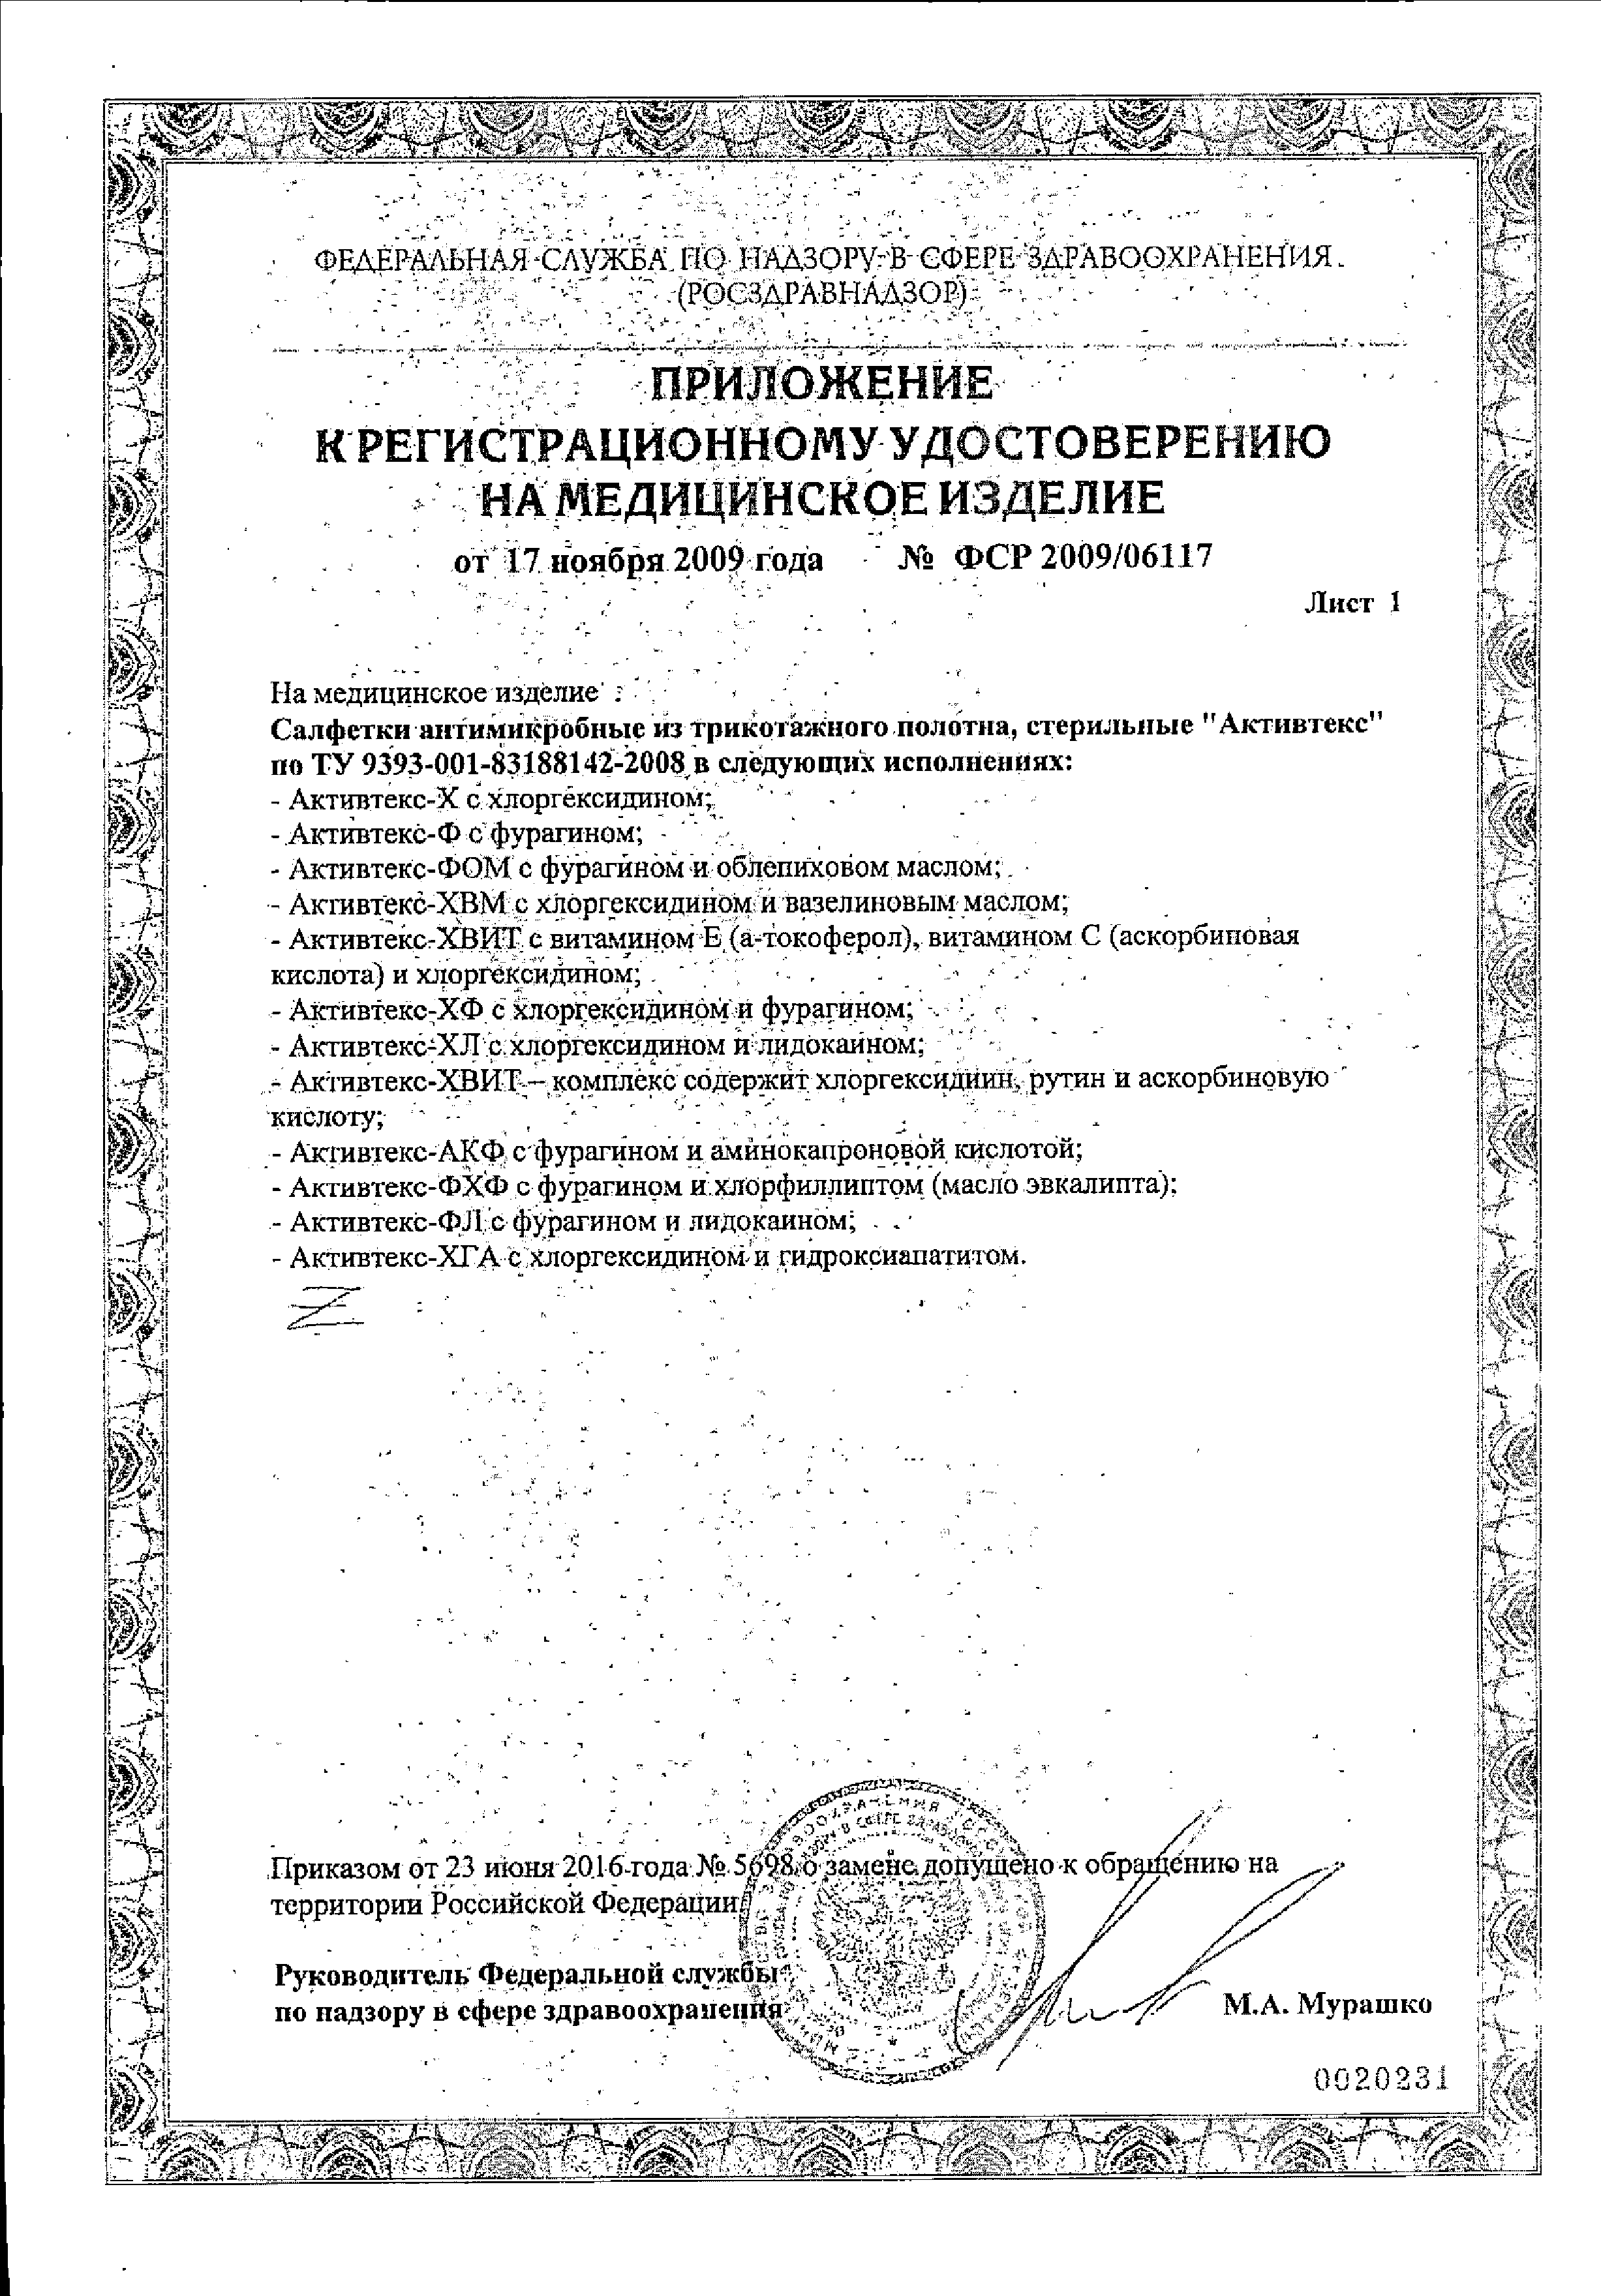 Активтекс-АКФ салфетка антимикробная сертификат